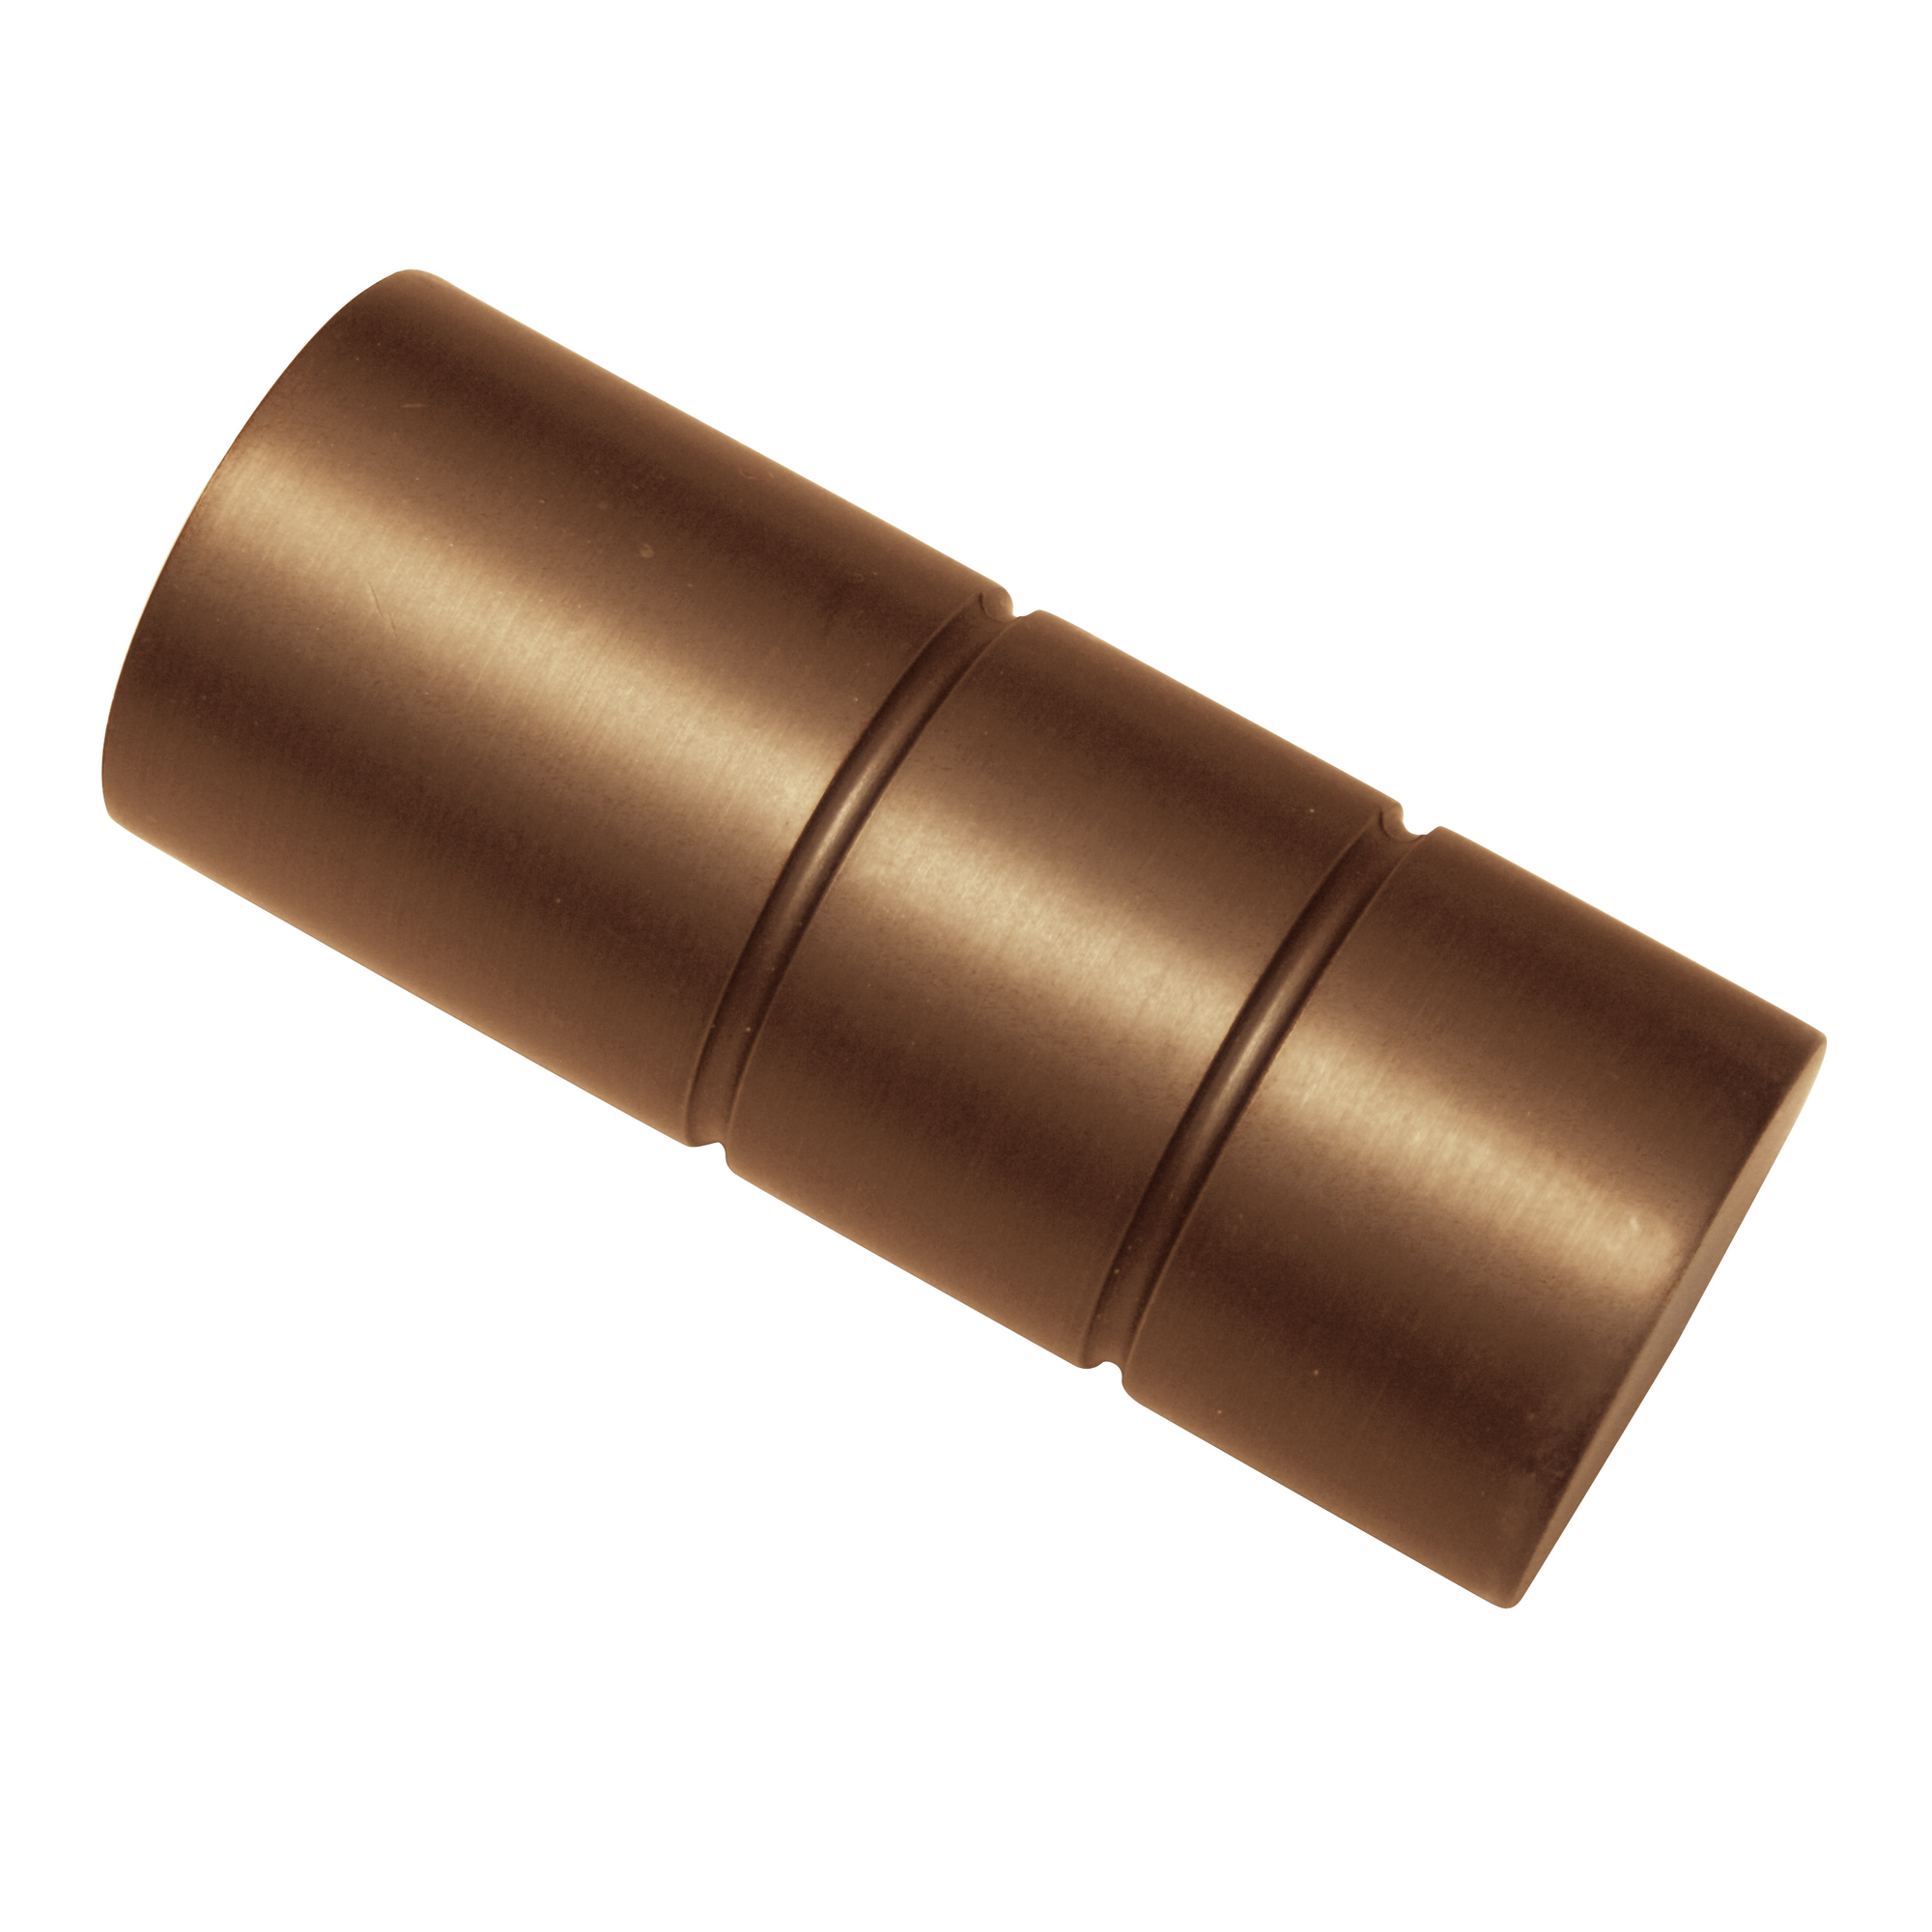 Endknopf 'Windsor' Zylinder bronze 2 Stück + product picture